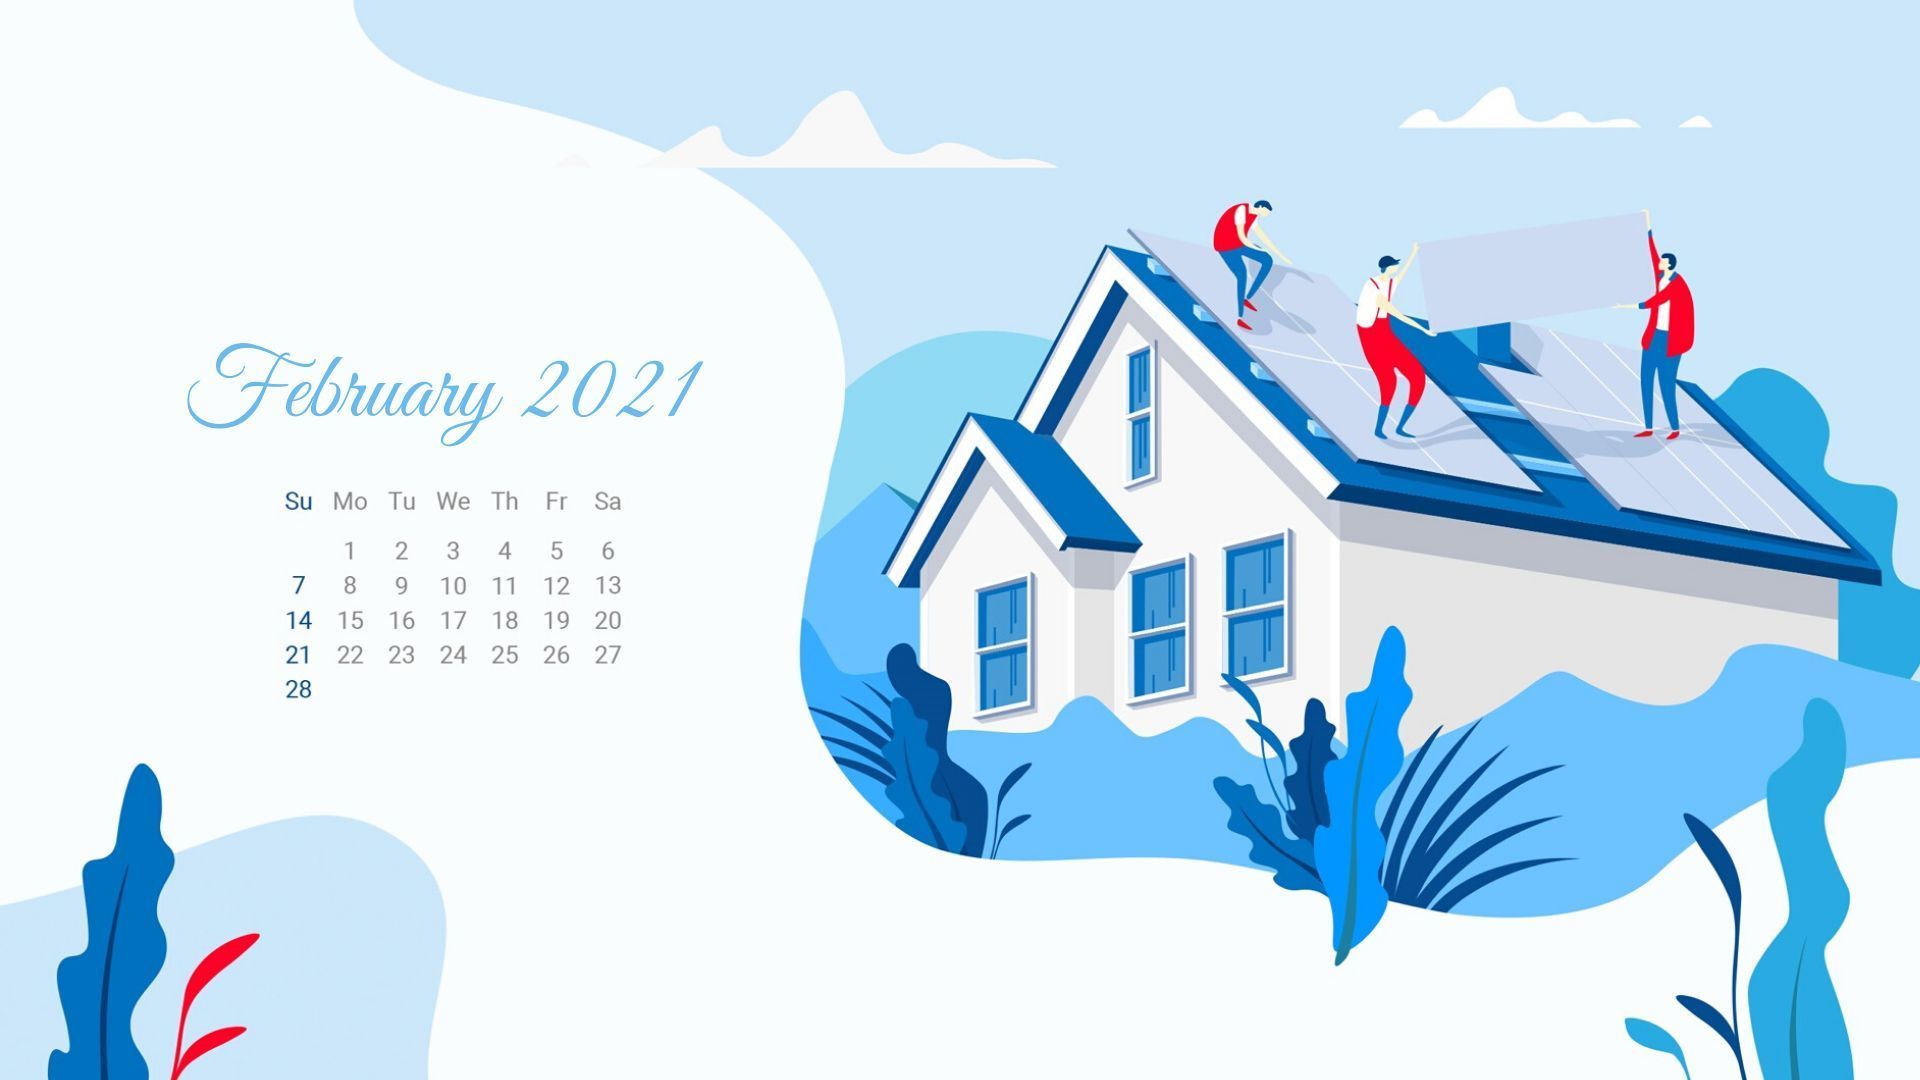 February 2021 Calendar Wallpaper. Calendar wallpaper, 2021 calendar, Free printable calendar